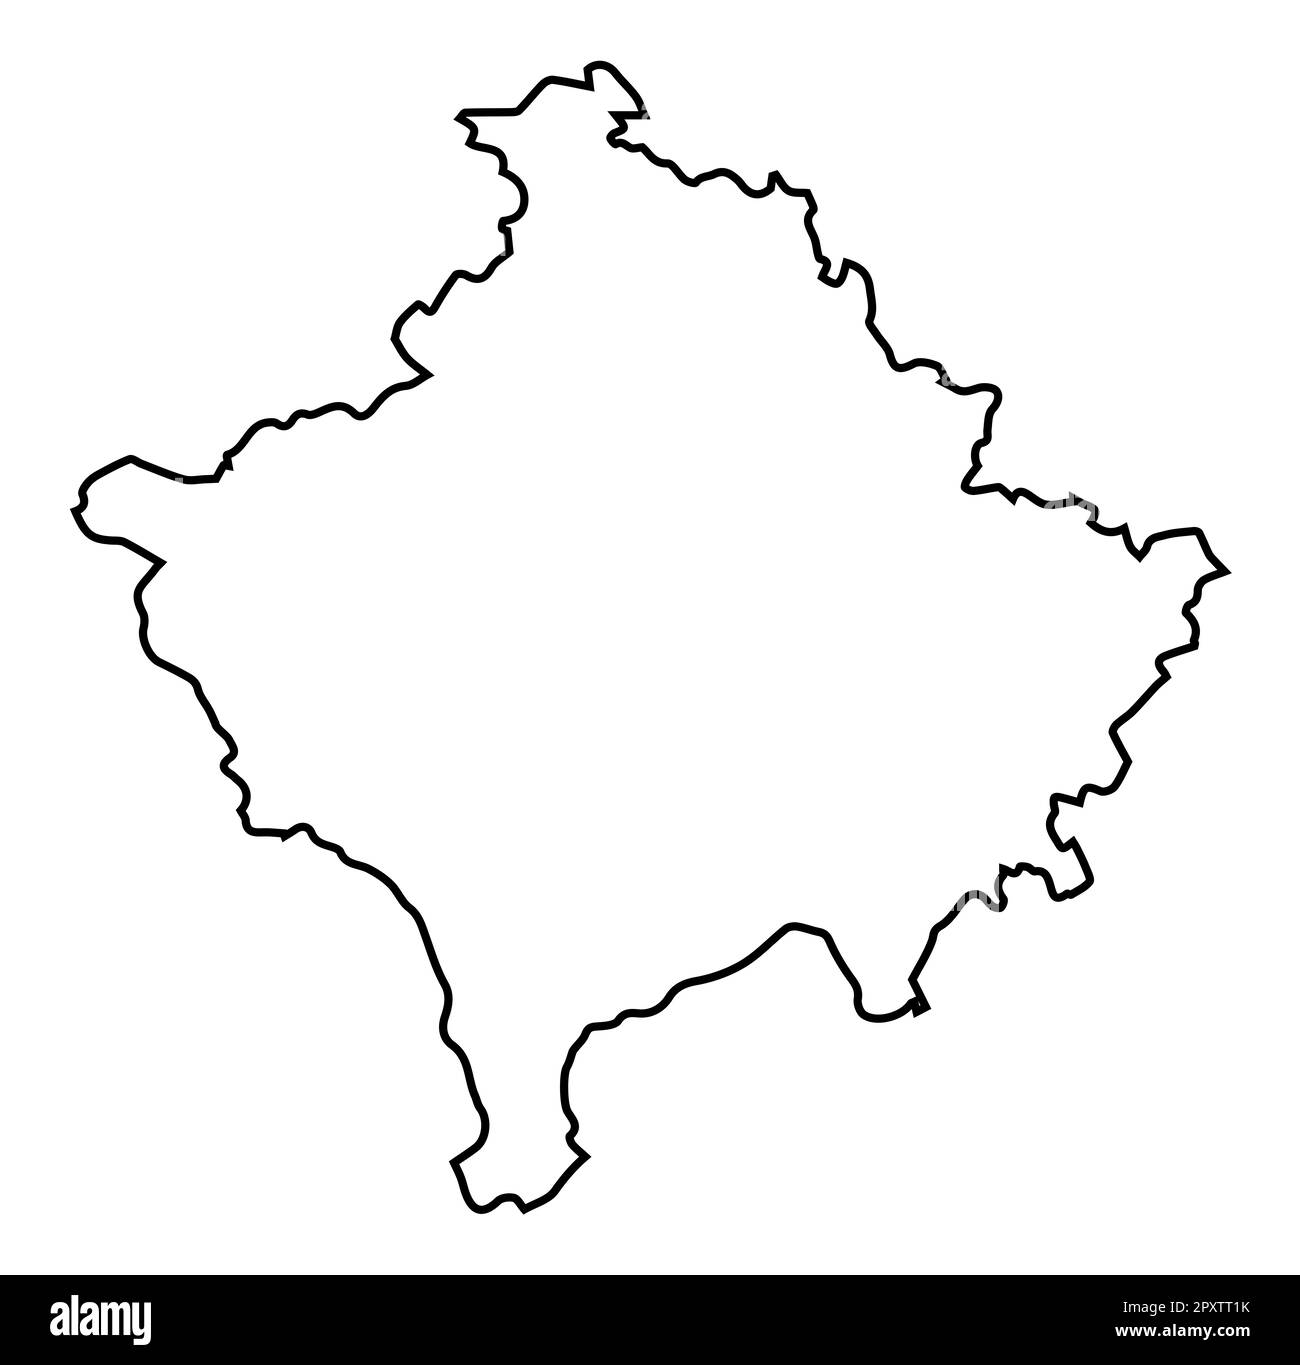 Kosovo map outline set over a white background Stock Photo